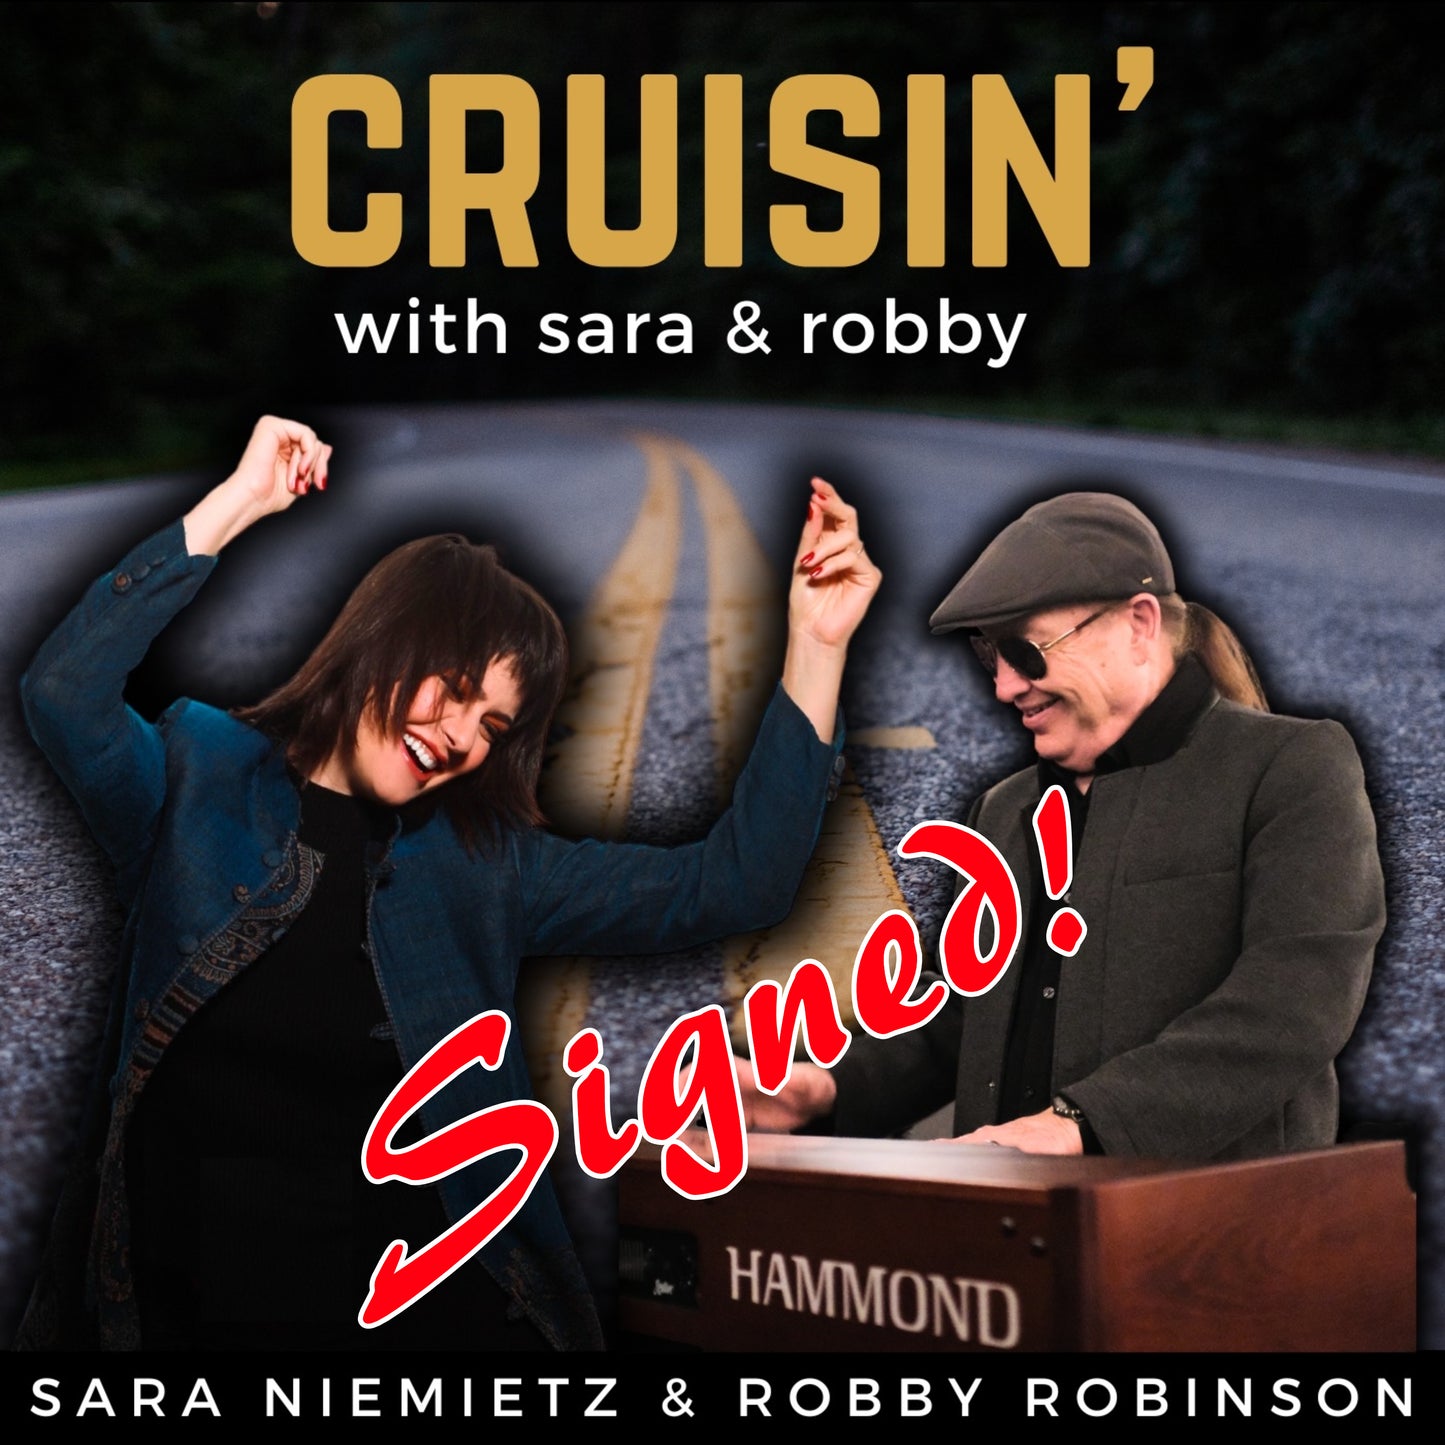 CRUISIN' with sara & robby CD SIGNED